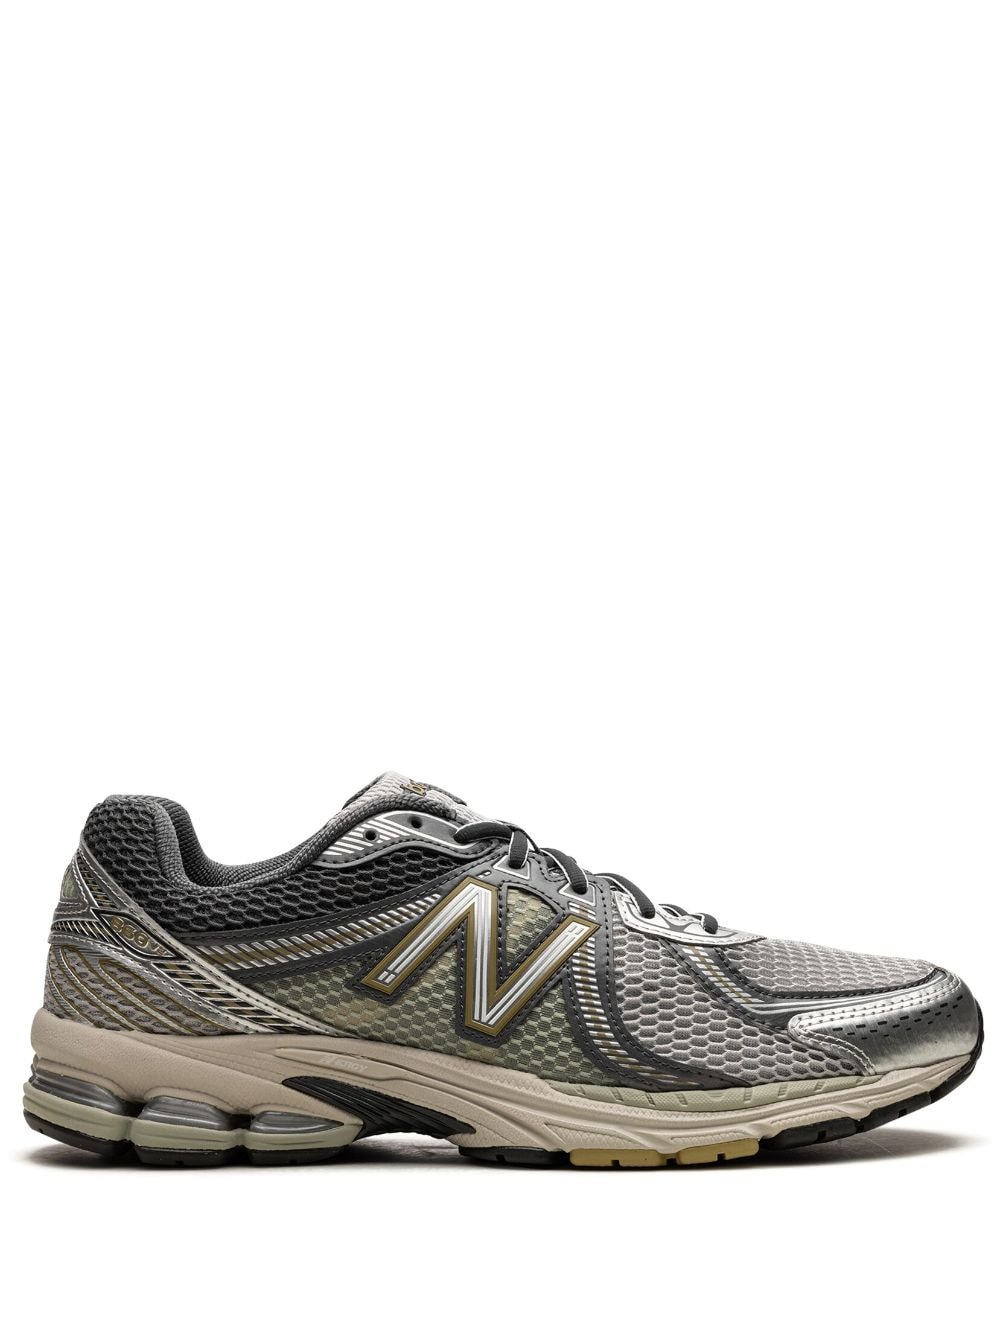 New Balance 860v2 "Earth" sneakers - Grey